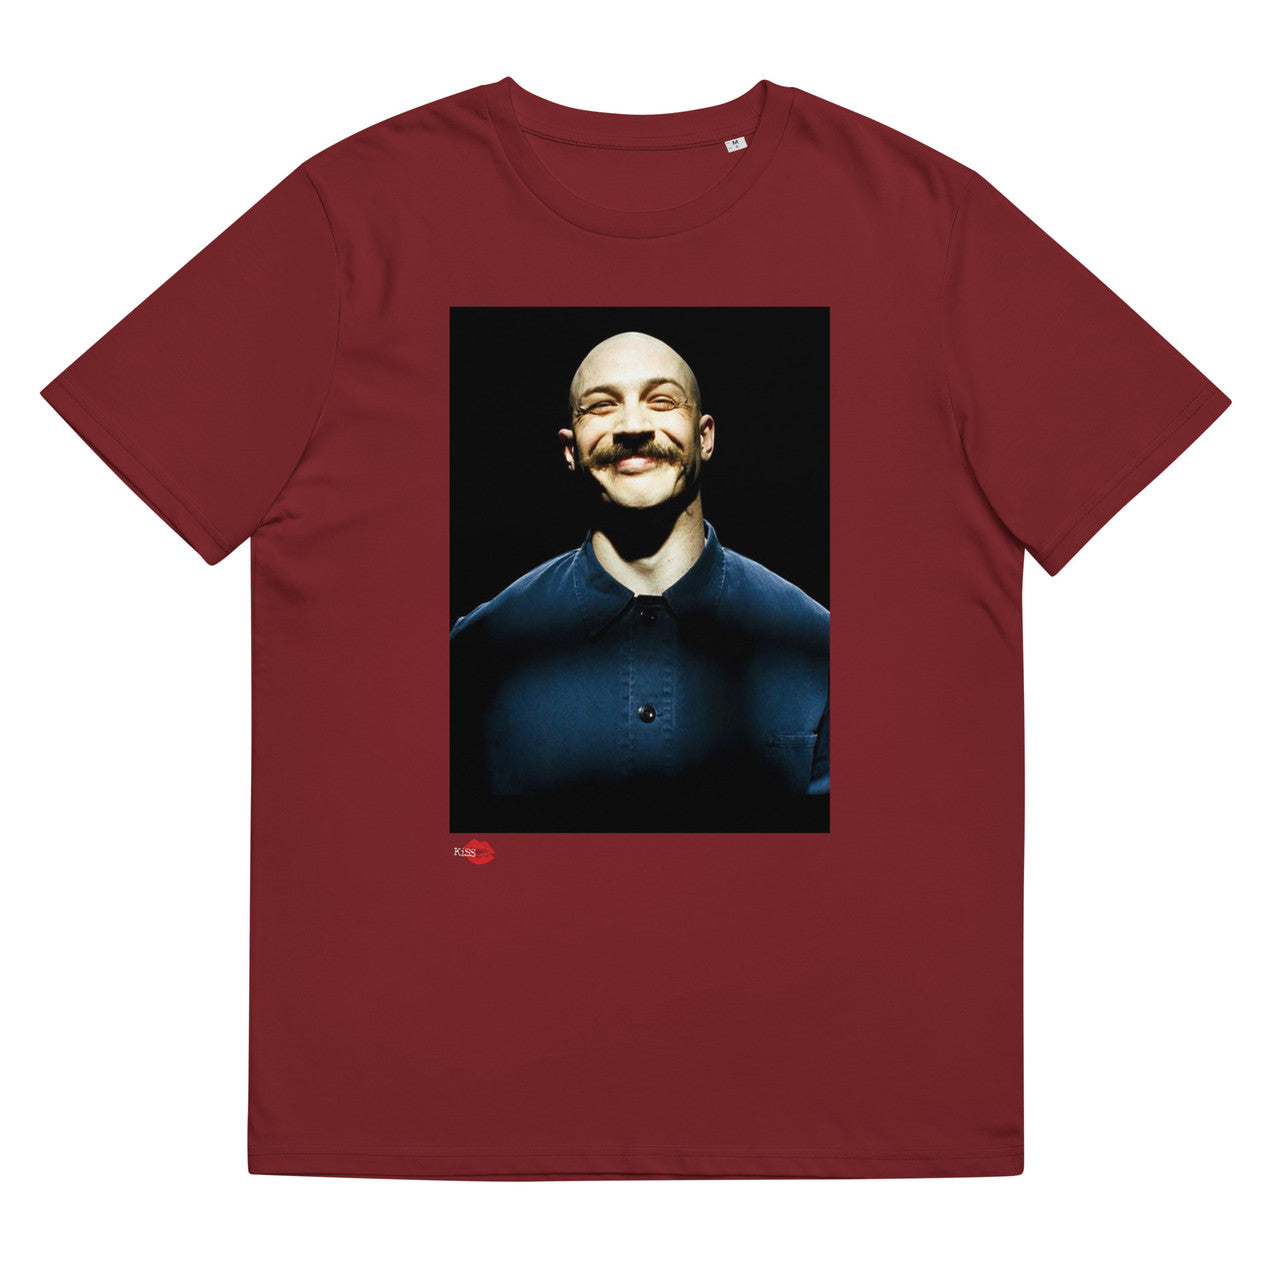 Charles Bronson Smile Unisex organic cotton t-shirt - Tom Hardy - Prison, Movie inspired - British - Happy - Movie Buff funny - Gift